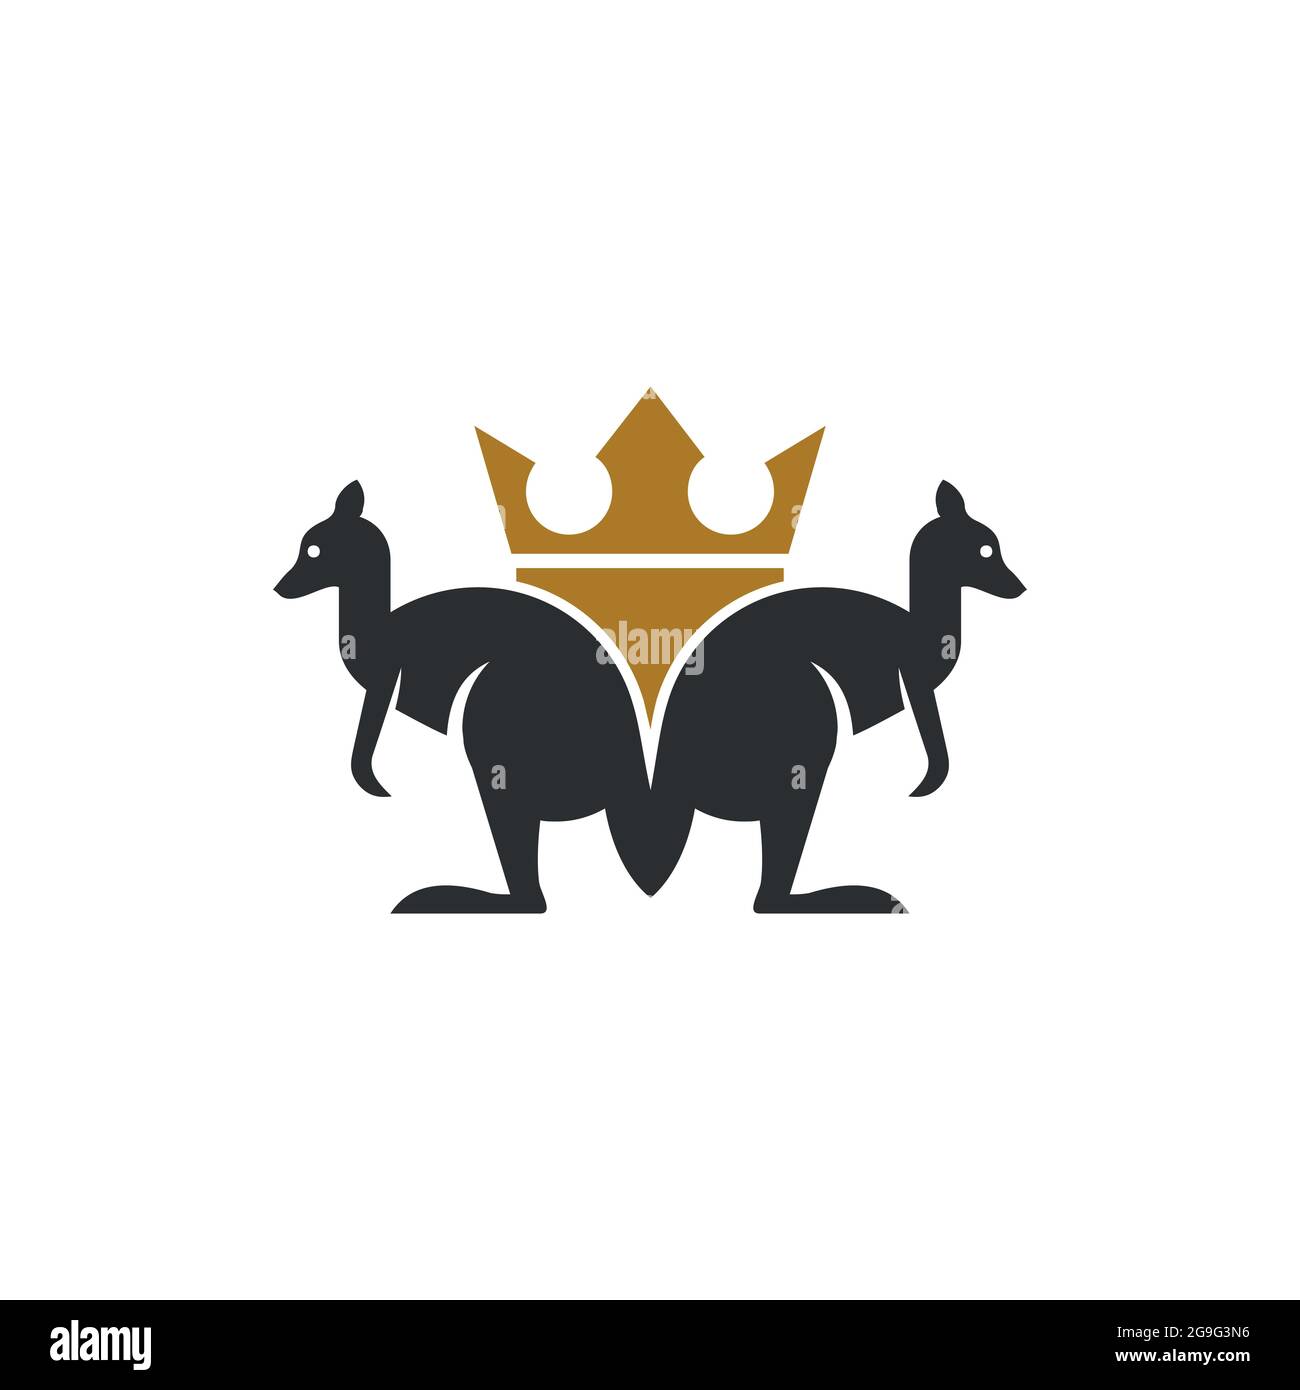 kangaroo crown letter M logo icon vector flat concept graphic design Stock Vector